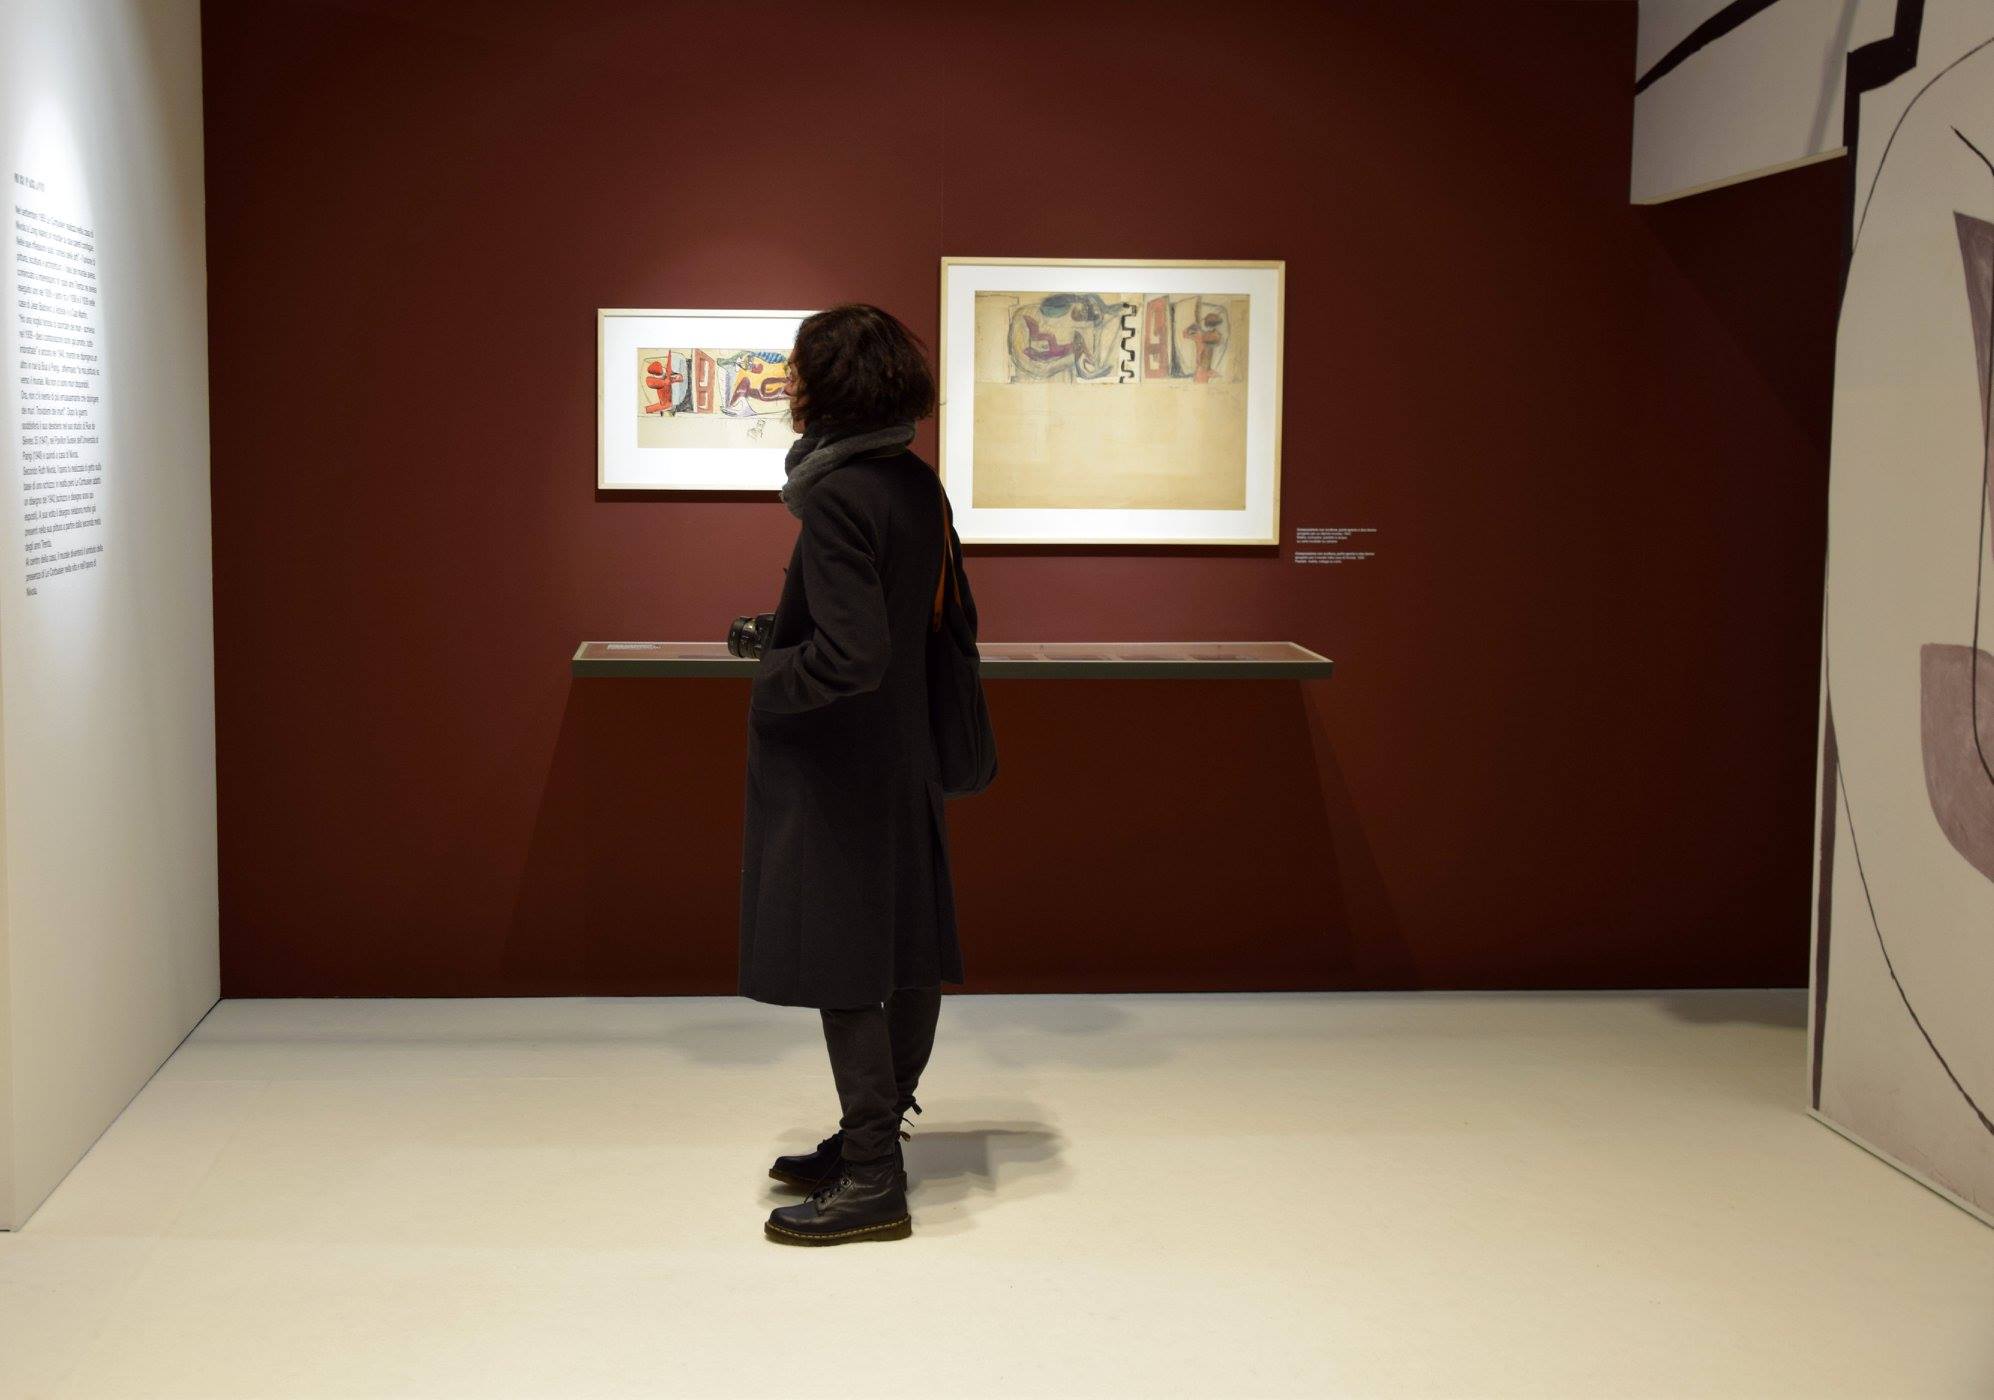 Mostra Le Corbusier - Museo Nivola